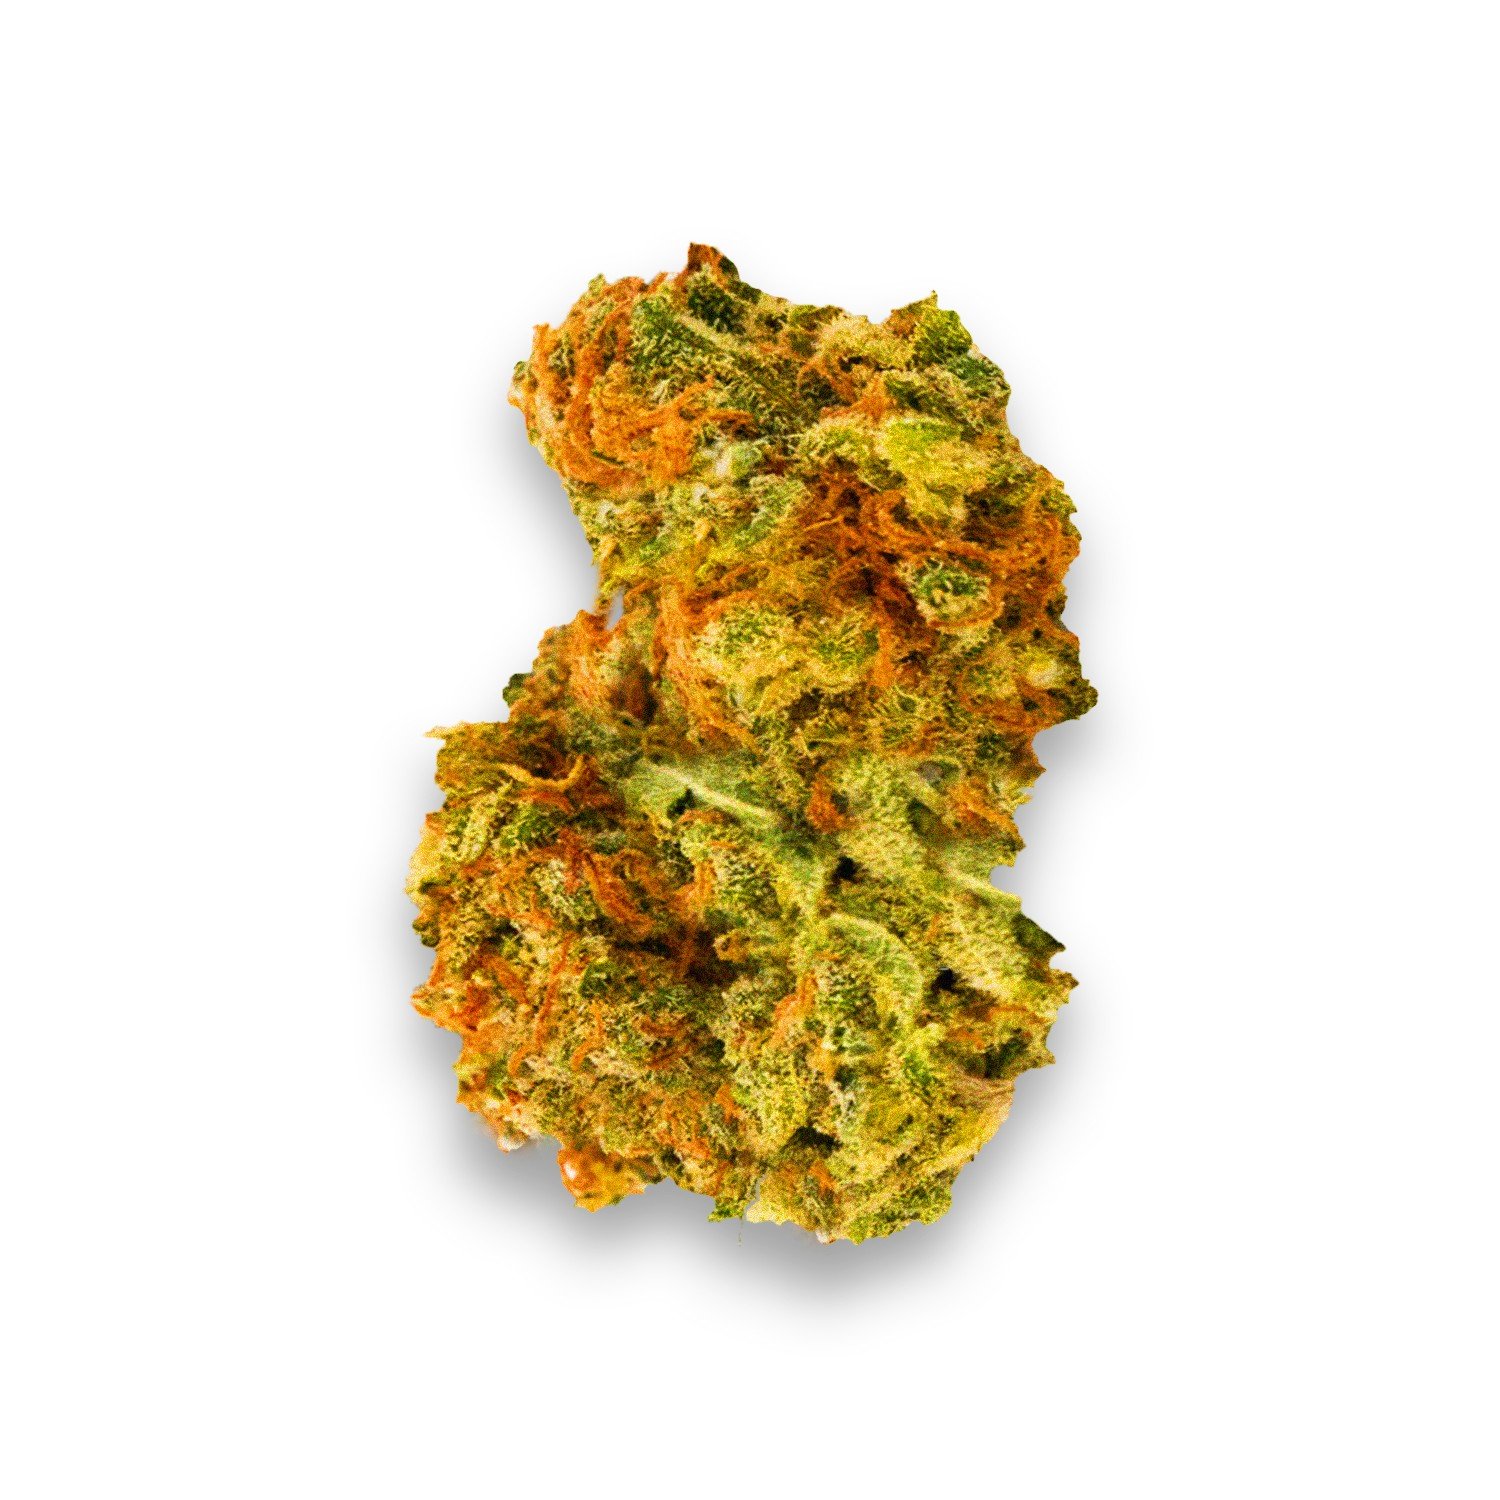 orange kush strain review